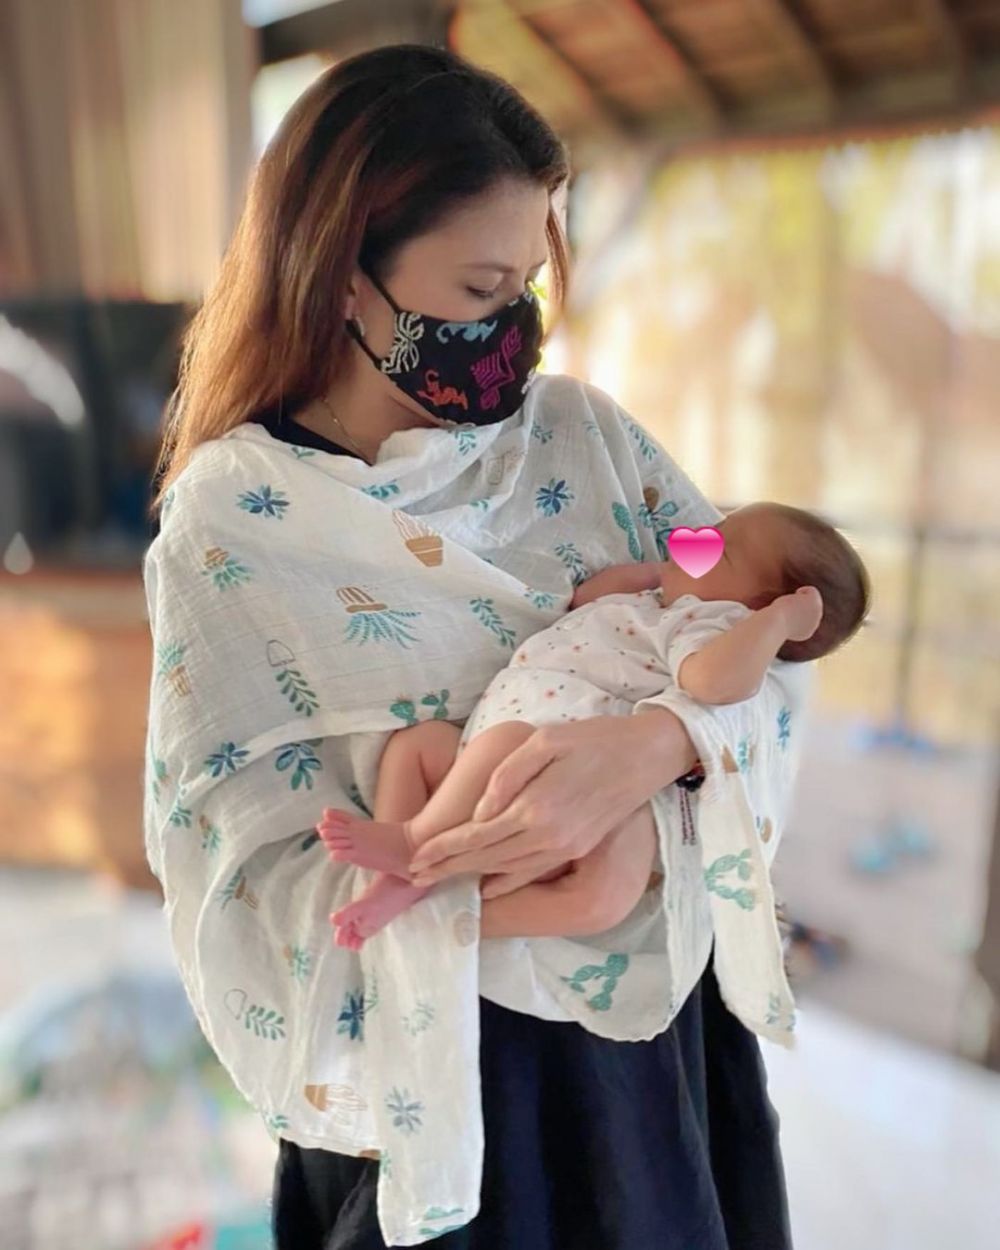 Unggah foto gendong bayi, Tamara Bleszynski disangka habis melahirkan